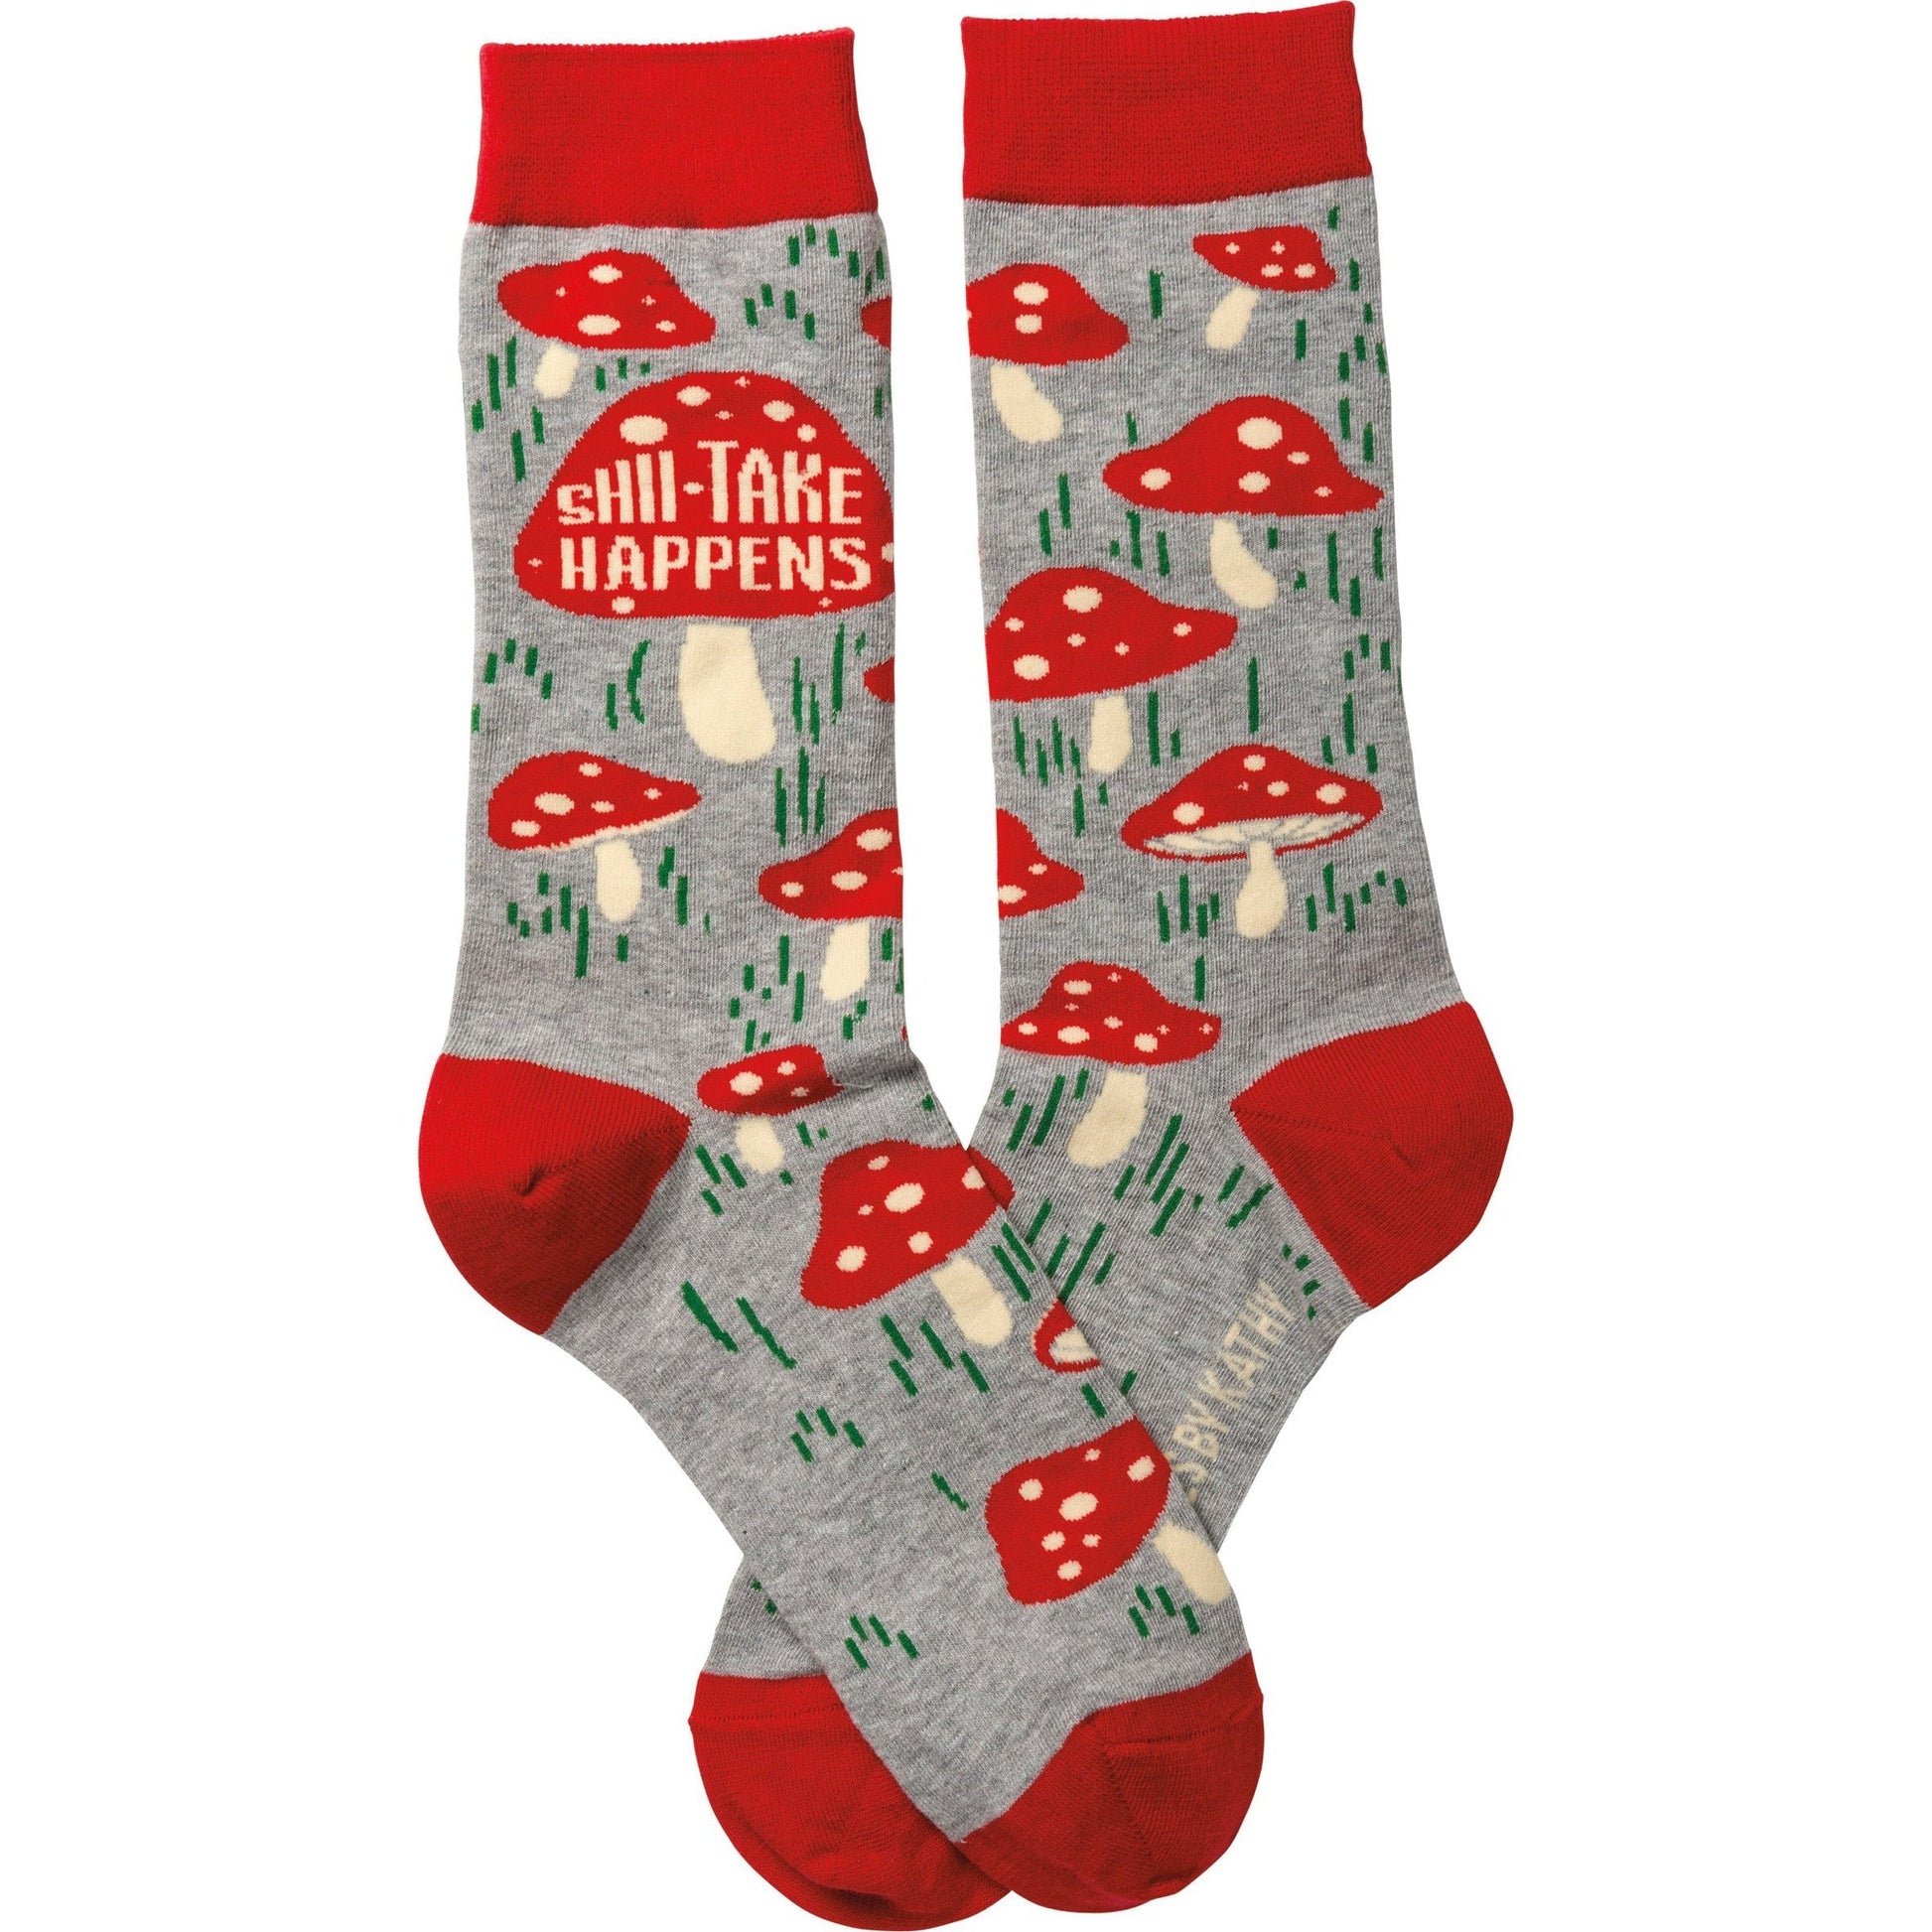 Shiitake Happens Funny Socks Mushrooms in Red | Unisex